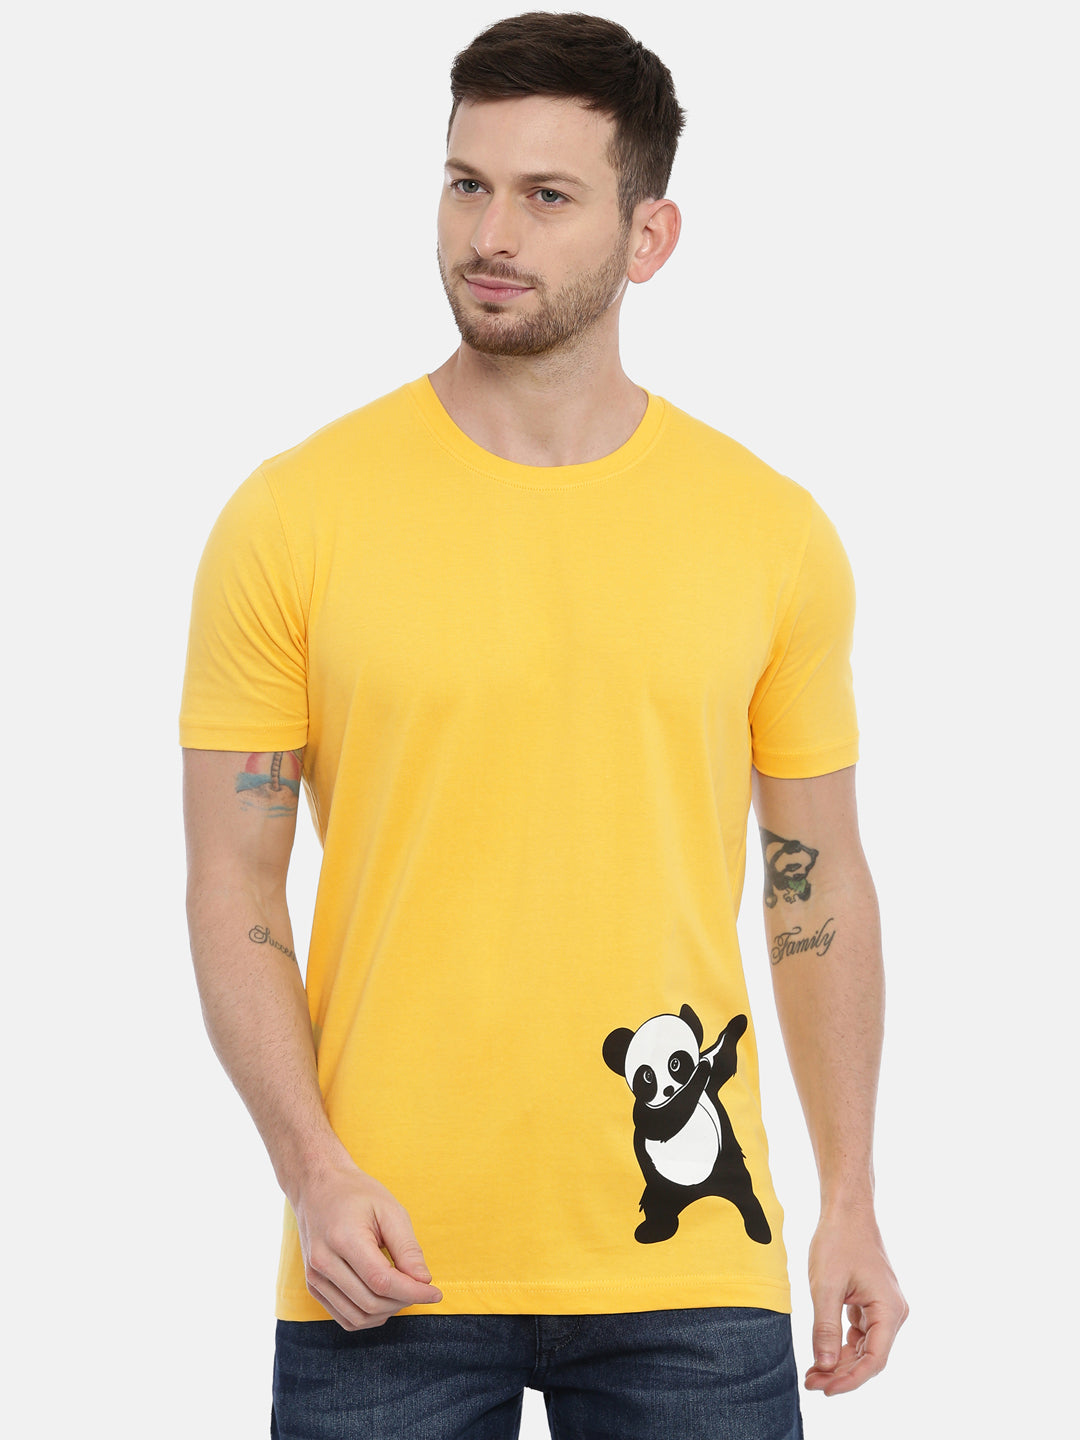 Dab Dance Panda T-Shirt Graphic T-Shirts Bushirt   